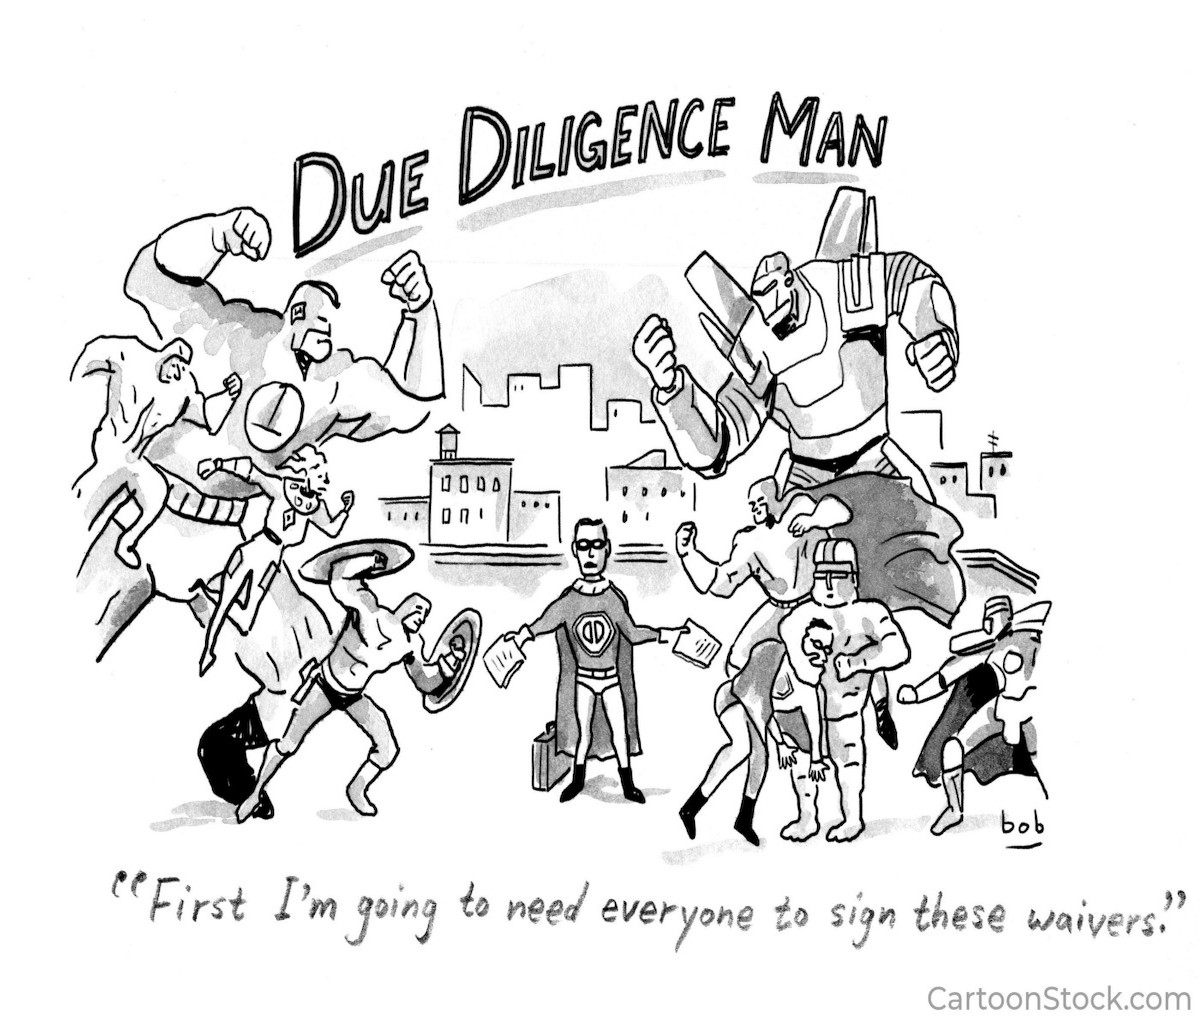 Blog: Adding Value Through Due Diligence